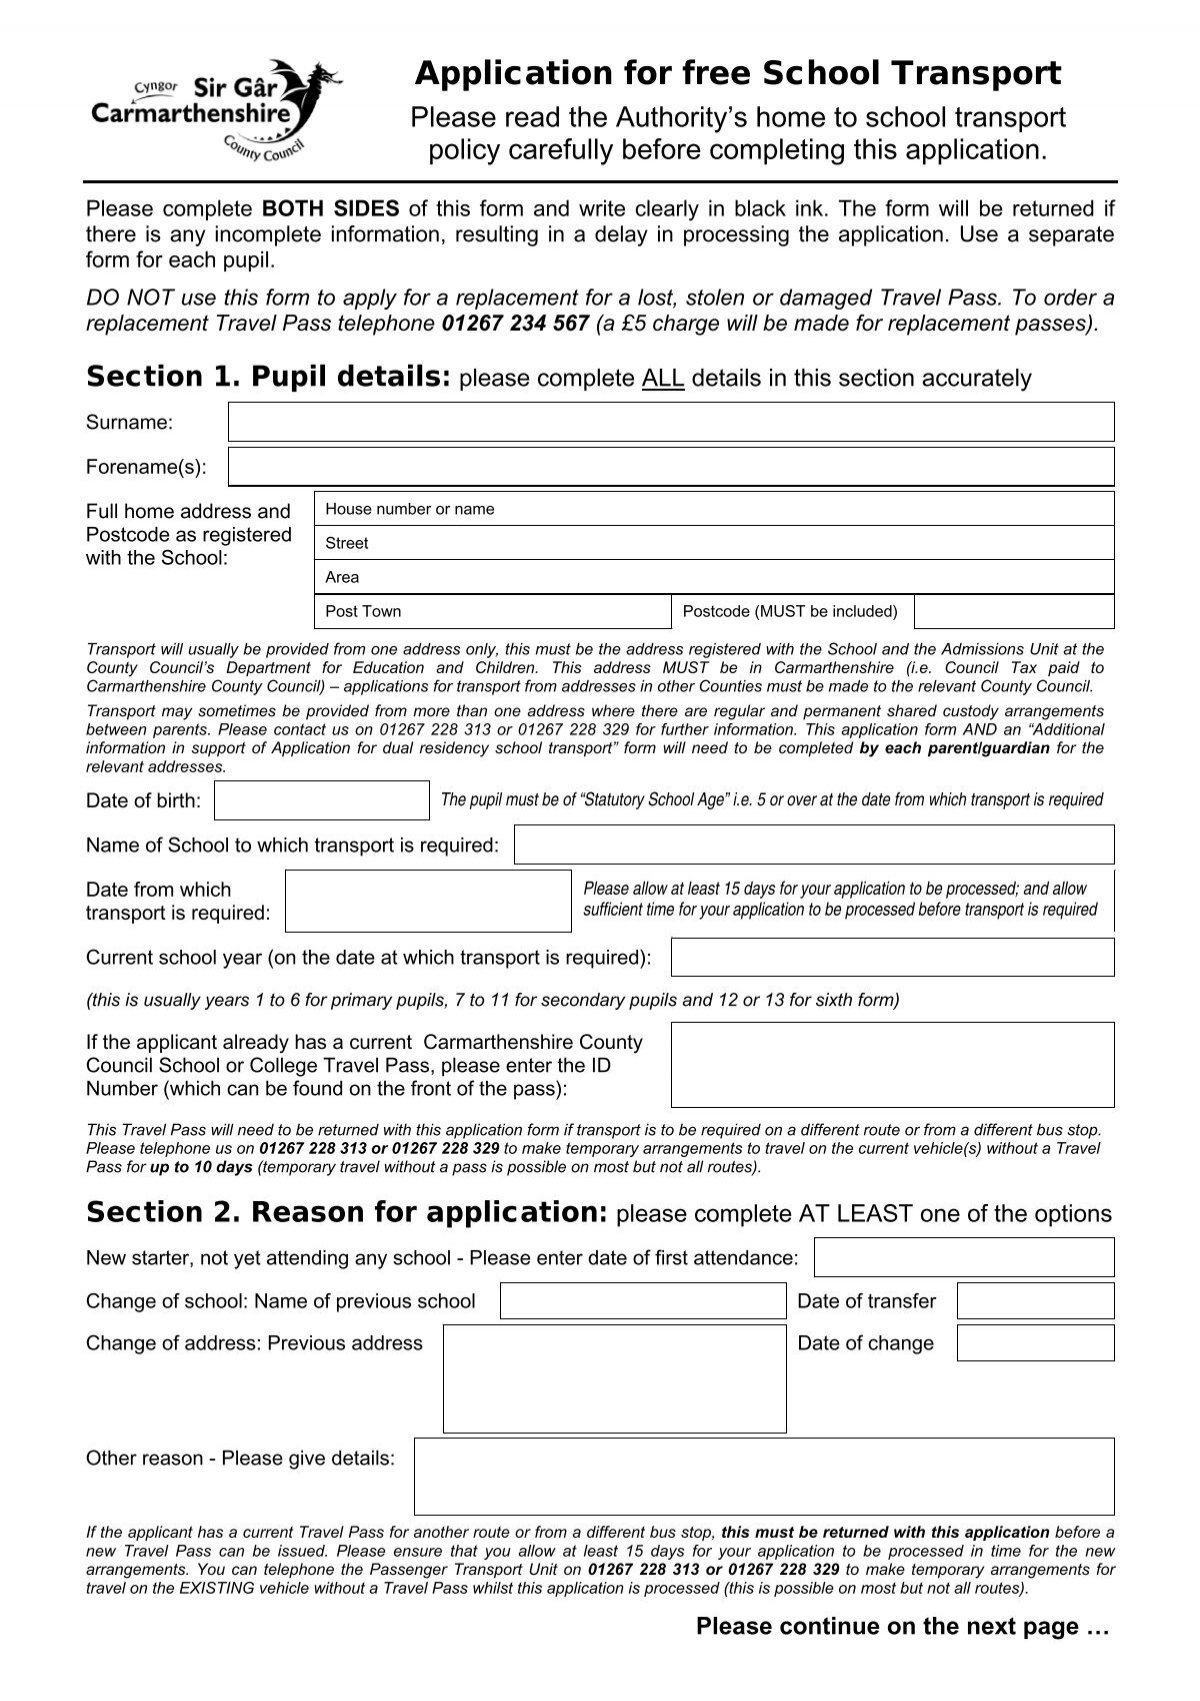 Application Form for School Transport